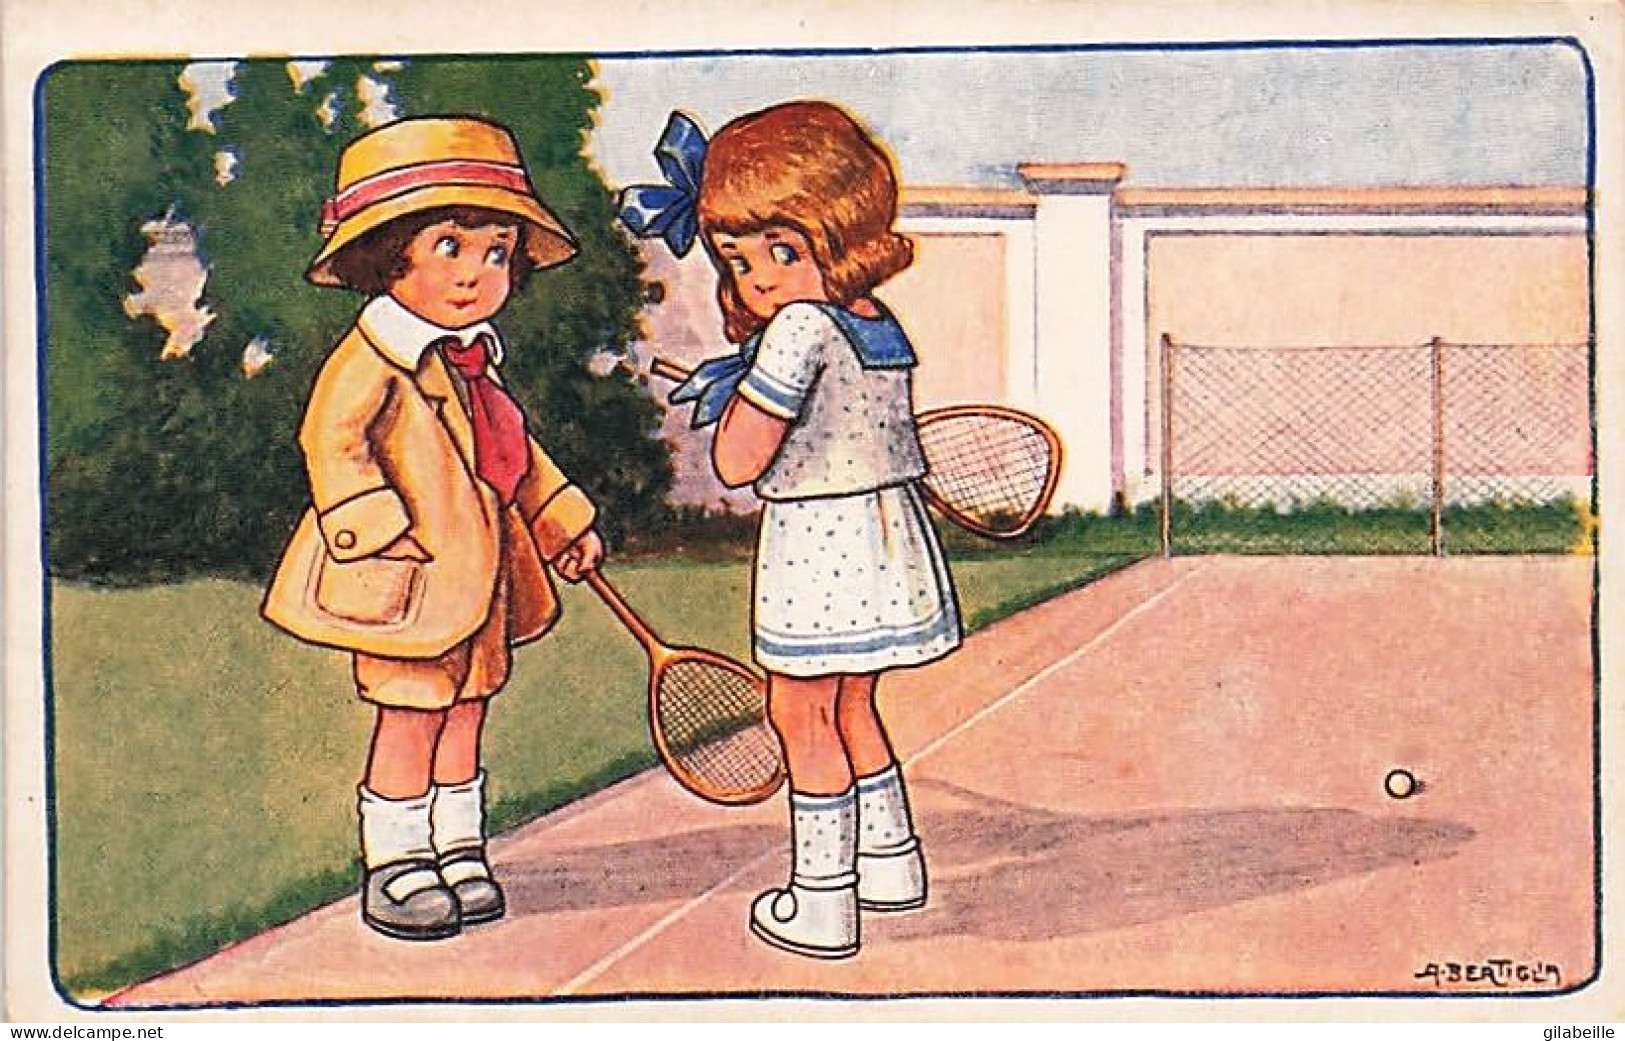 Sport - TENNIS - Illustrateur Signé A . Bertiglia - Enfants Au Tennis - 1922 - Bertiglia, A.